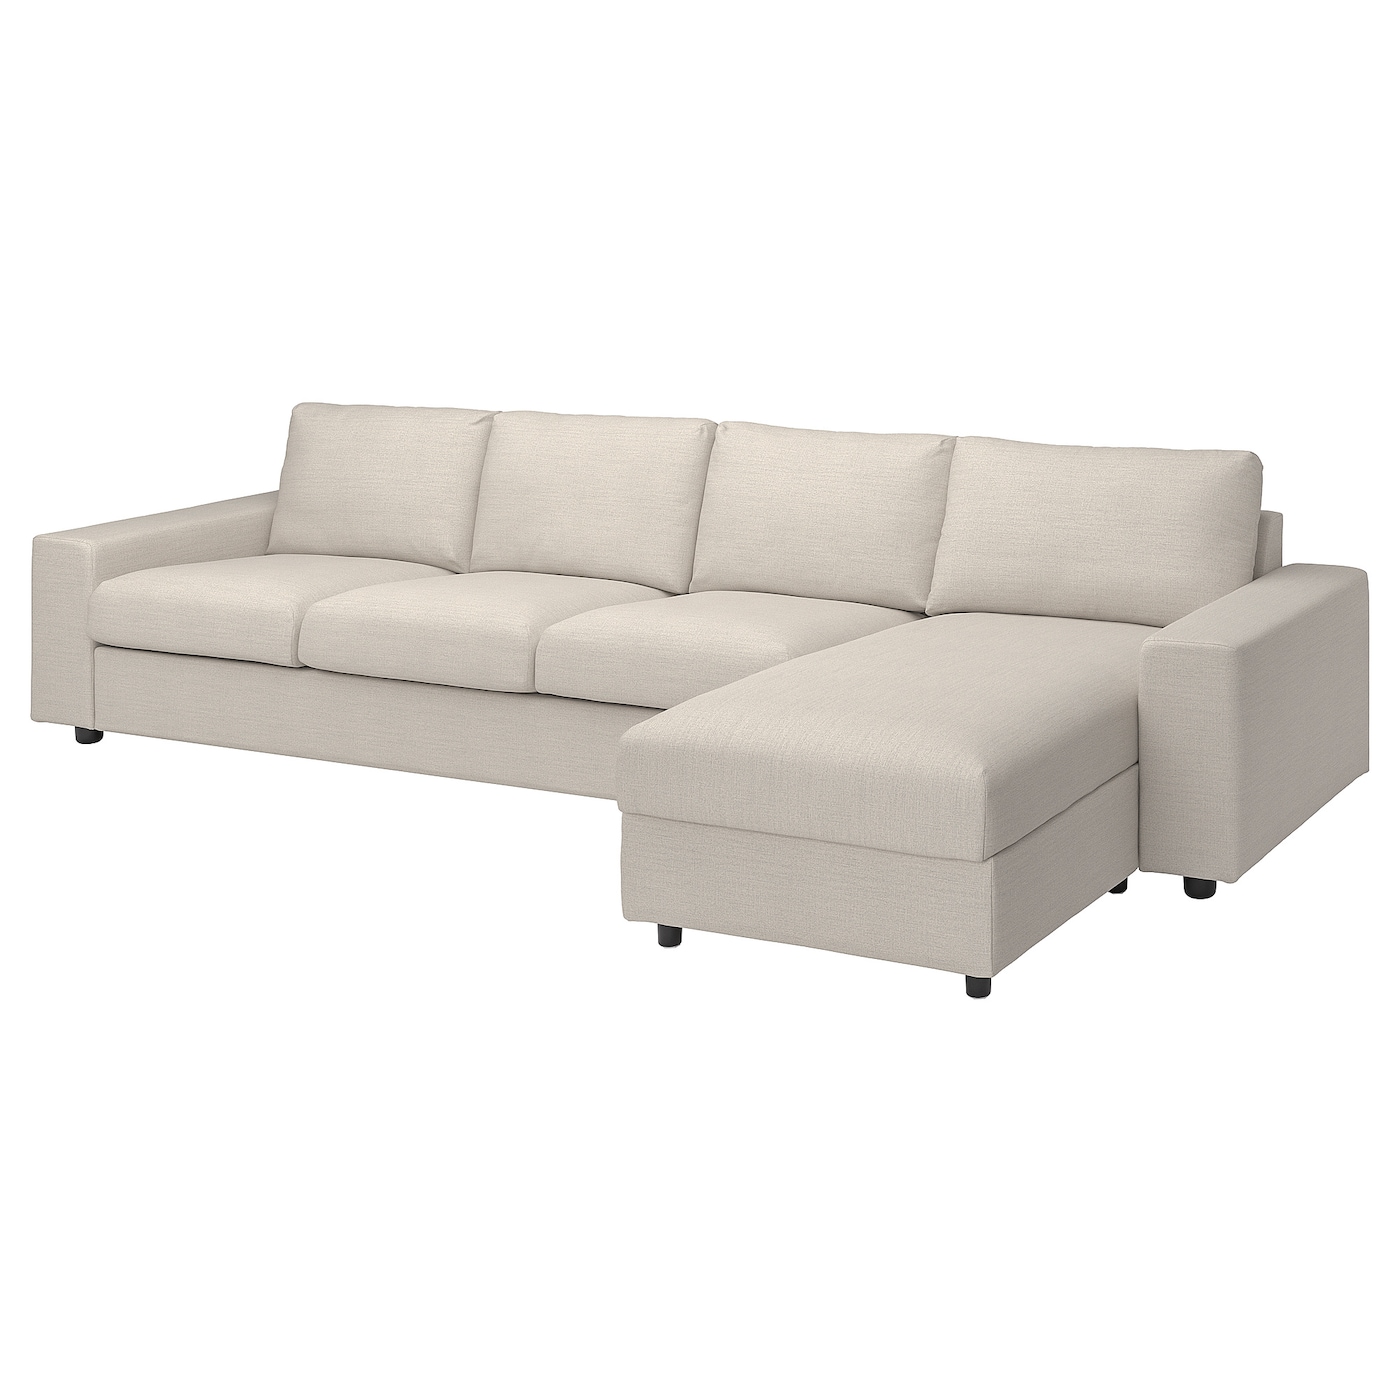 Угловой 4-местный диван с шезлонгом - IKEA VIMLE/ВИМЛЕ ИКЕА, 336/164х125х68 см, бежевый